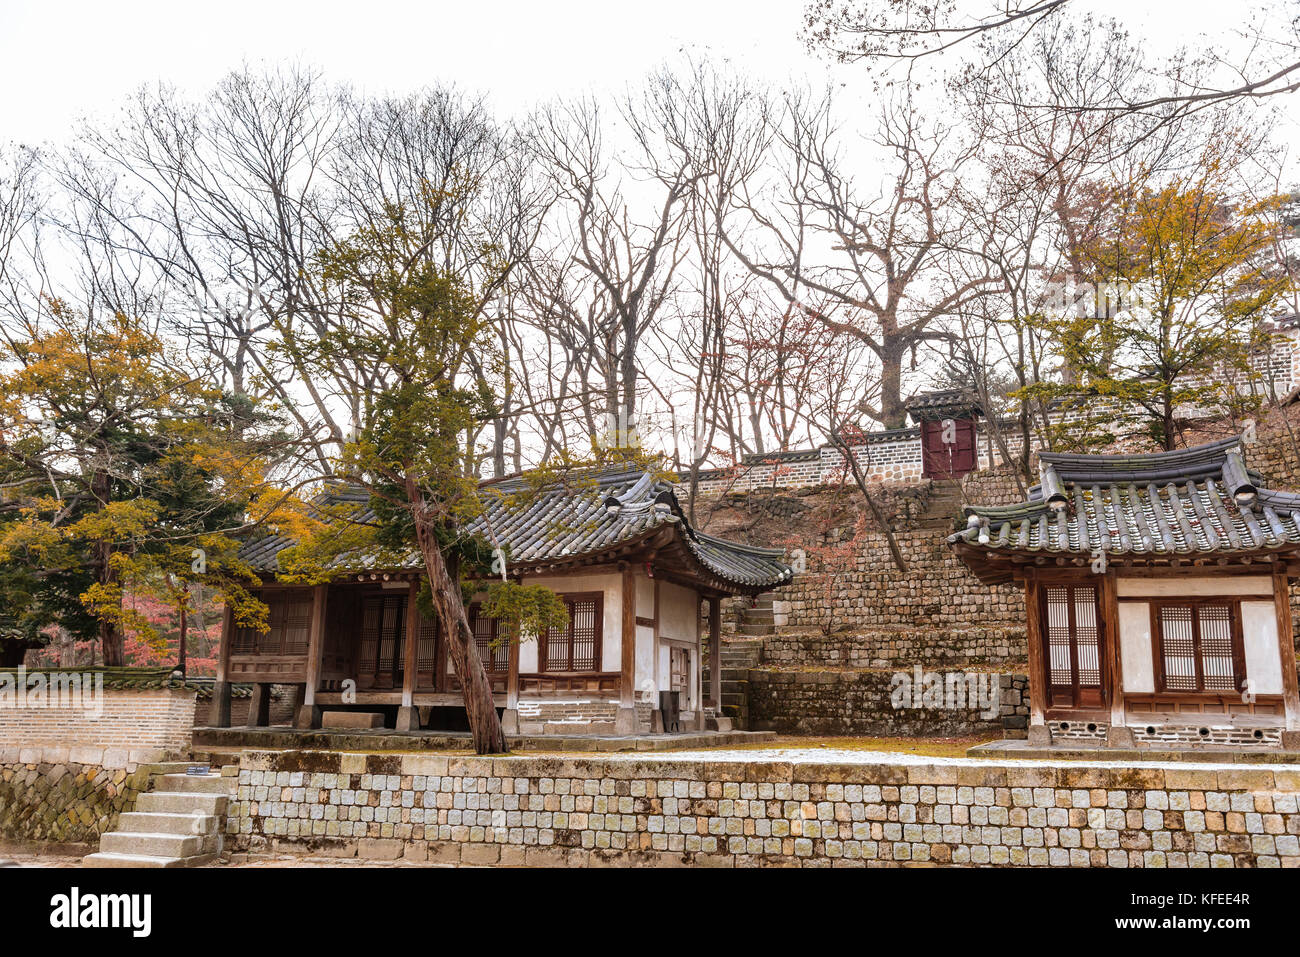 Korean Traditional Architecture In The Secret Garden Of